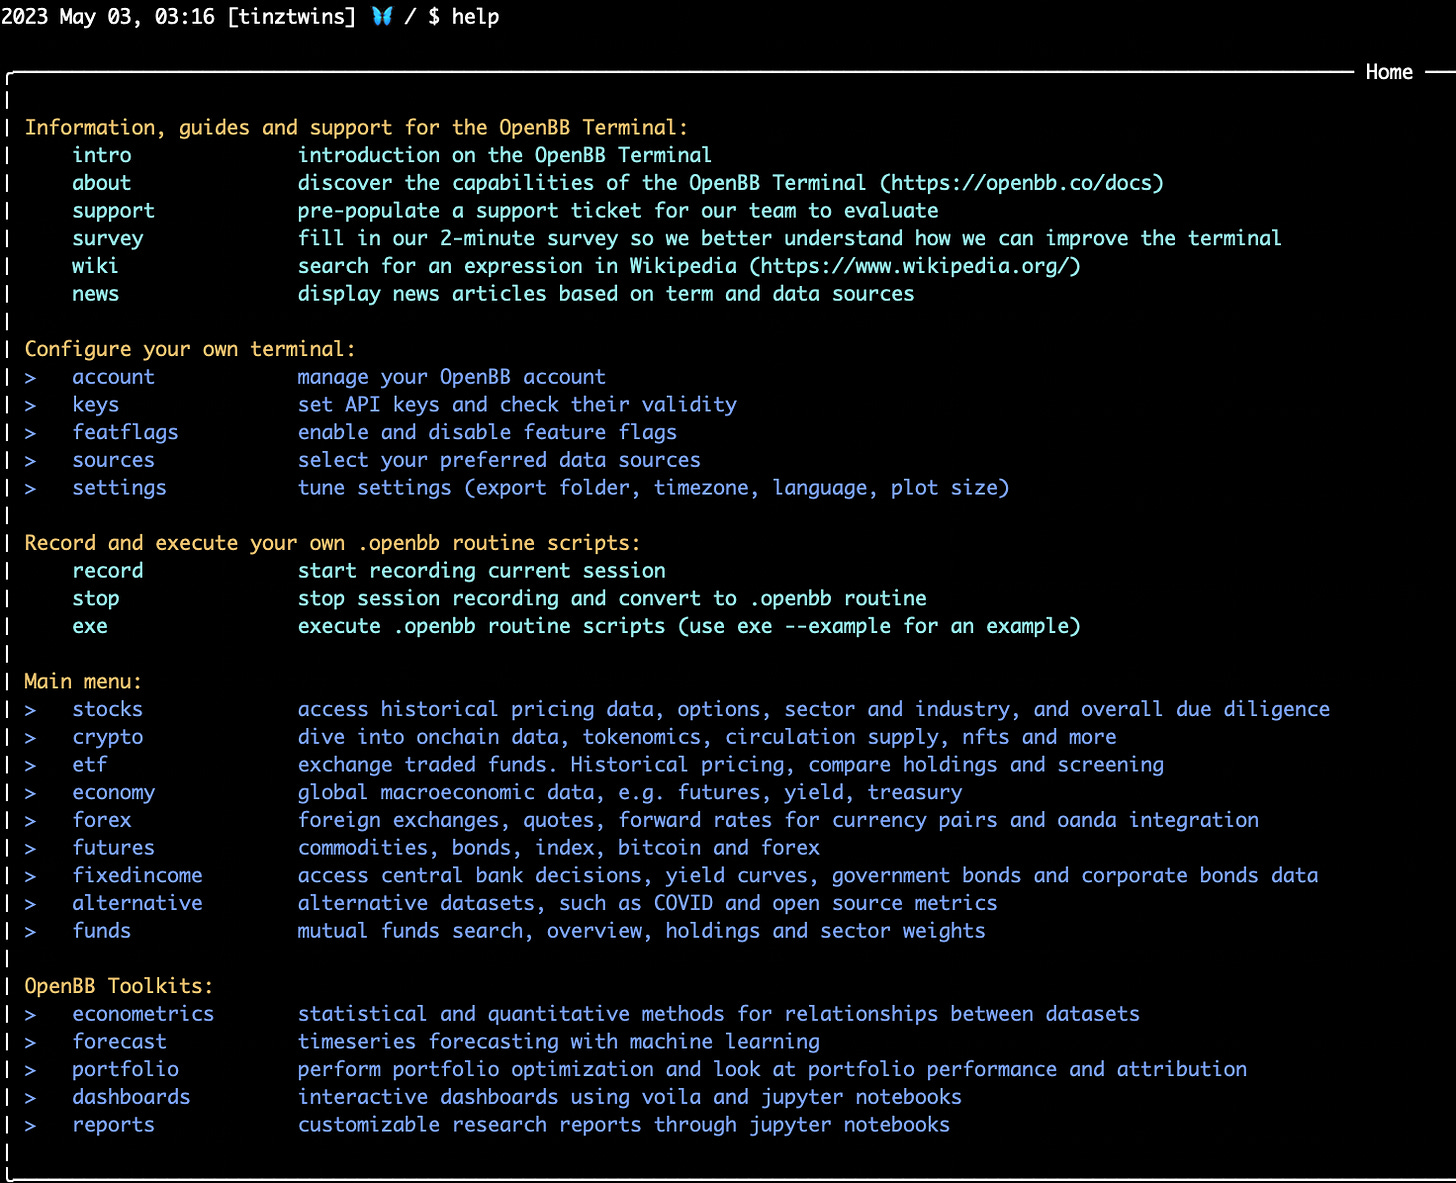 OpenBB Terminal help menu (Screenshot by authors)